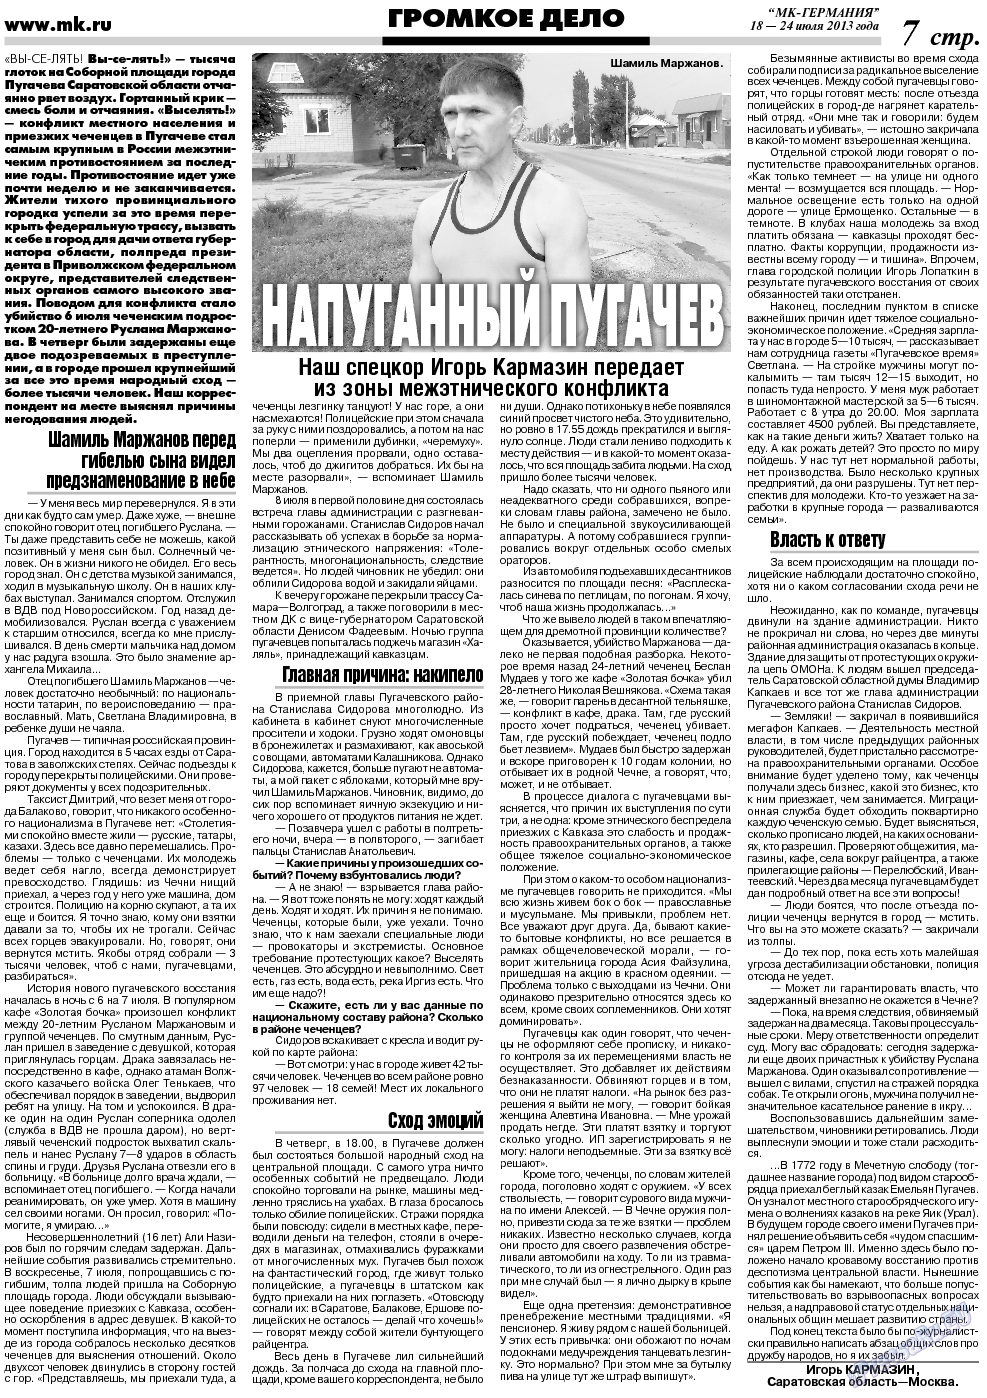 МК-Германия, газета. 2013 №29 стр.7